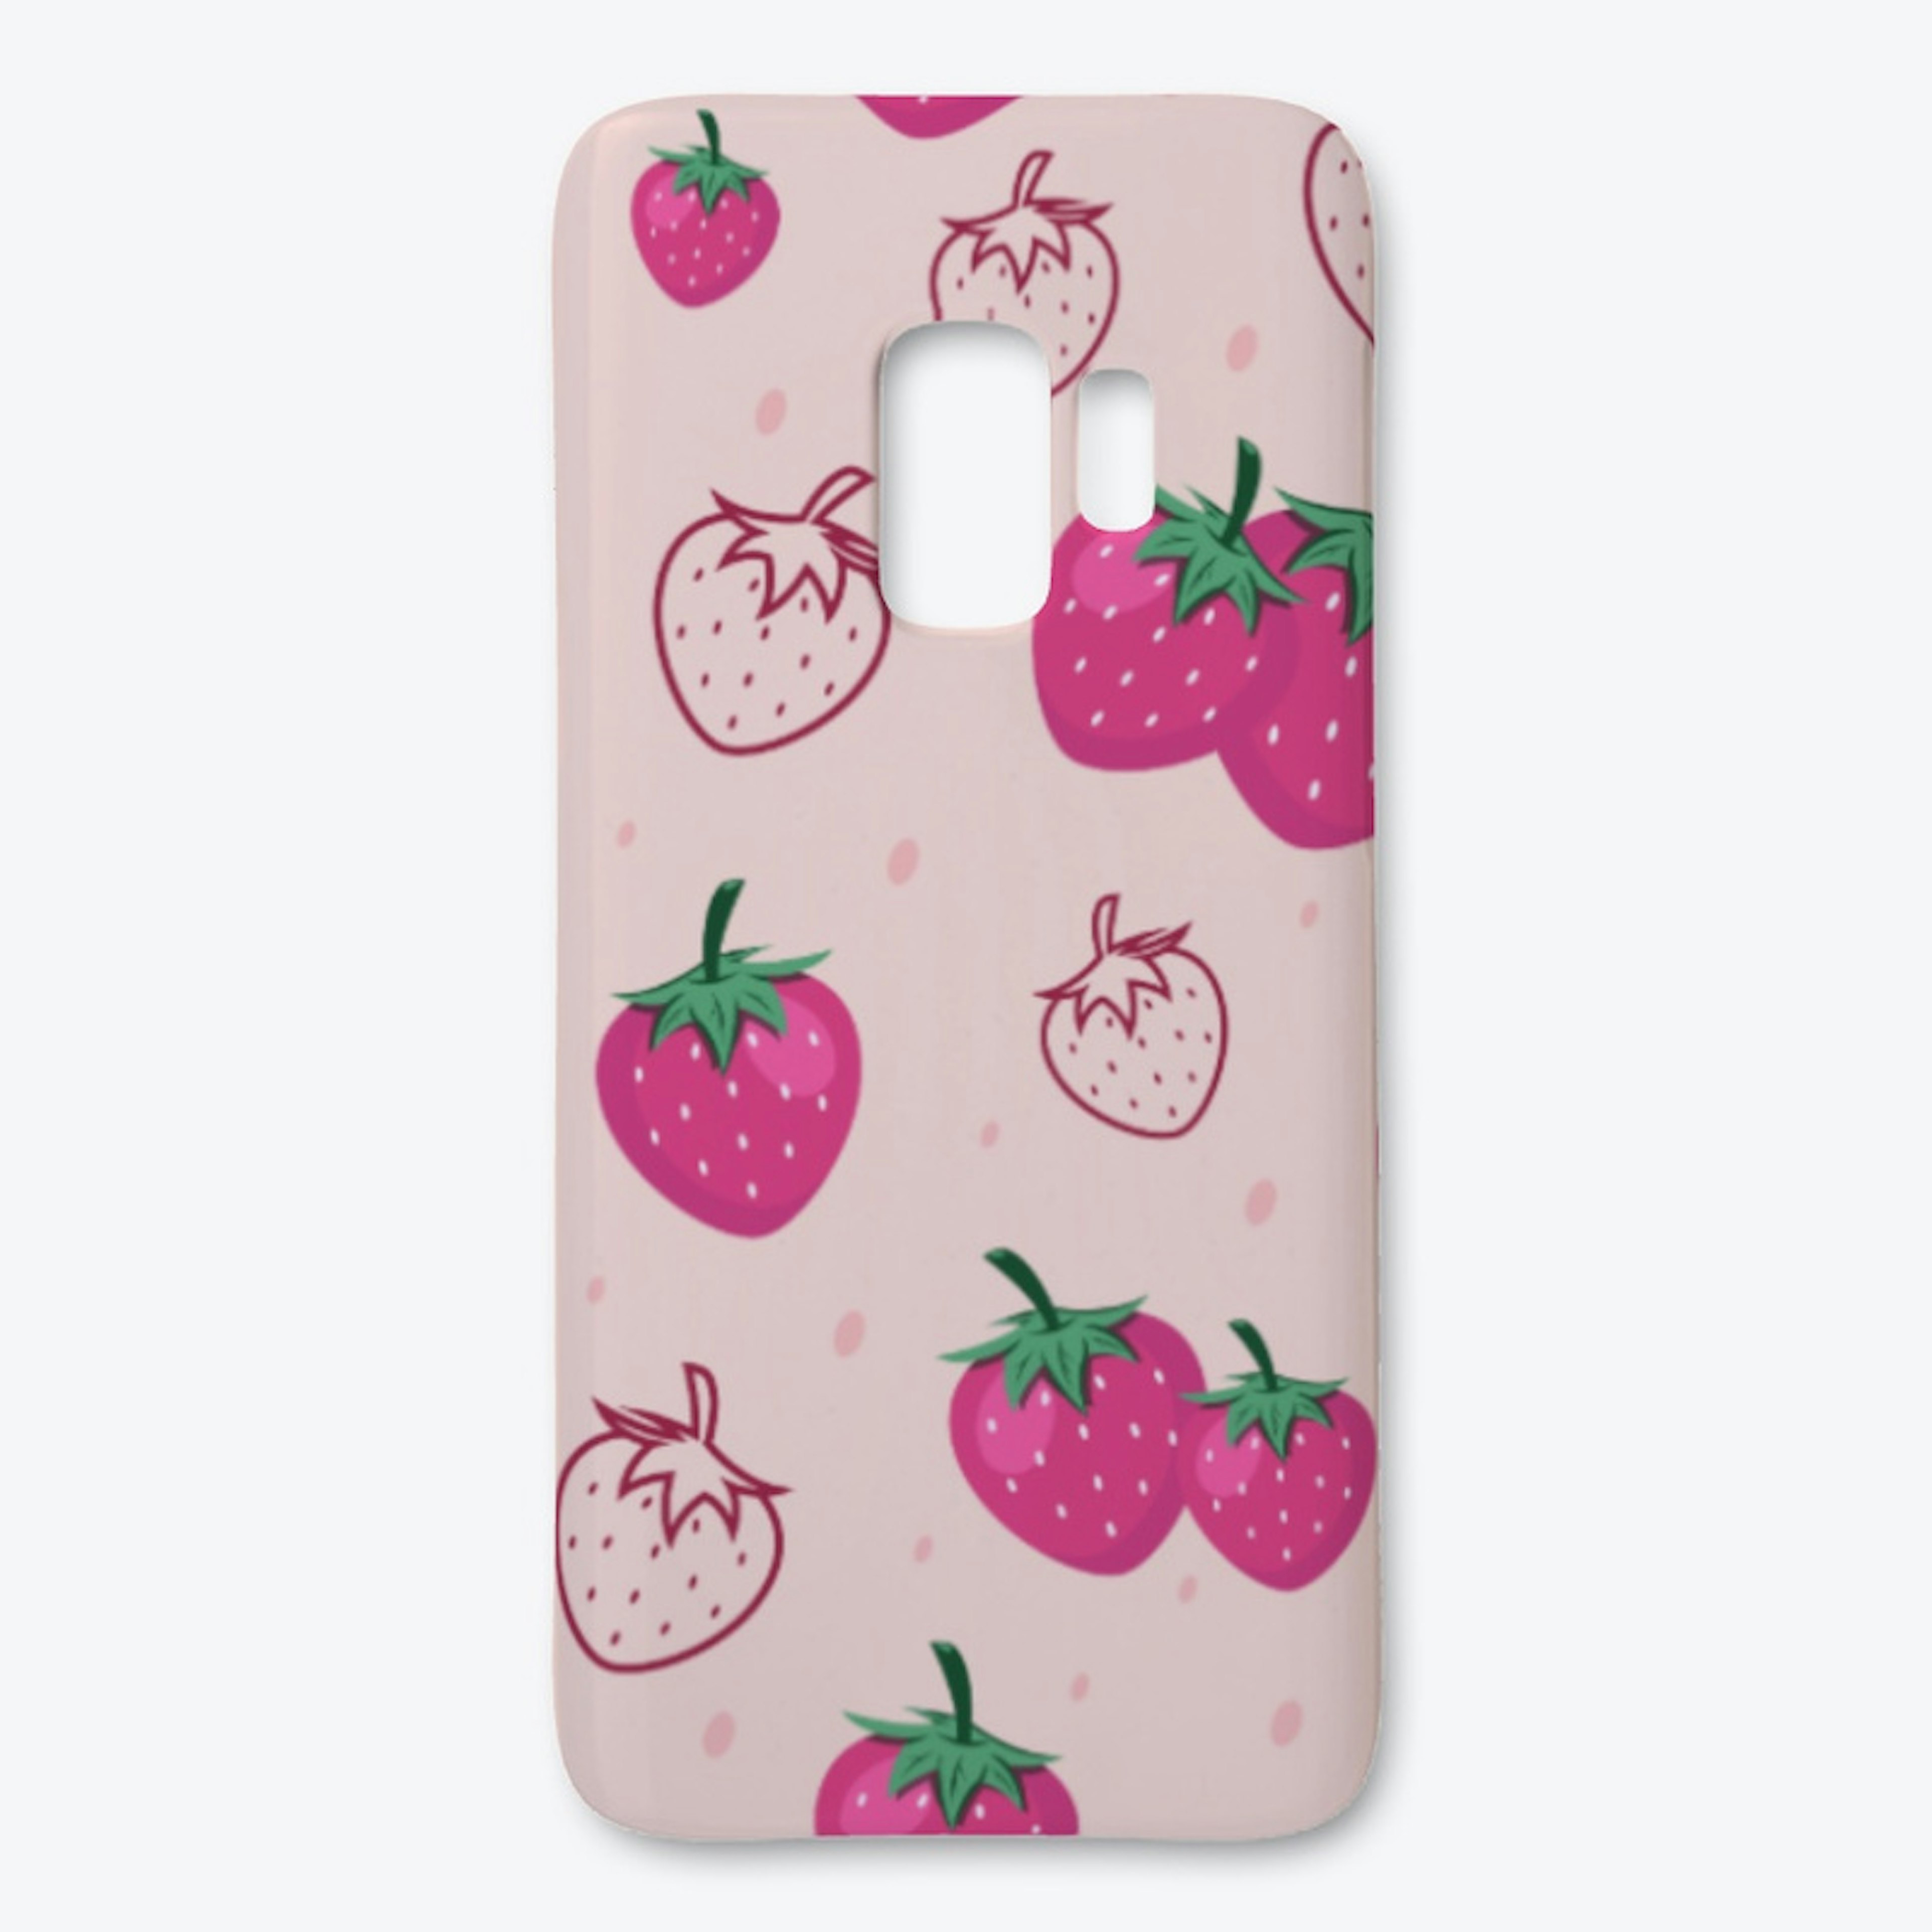 Strawberry Phone Case, Bottle, Pillows